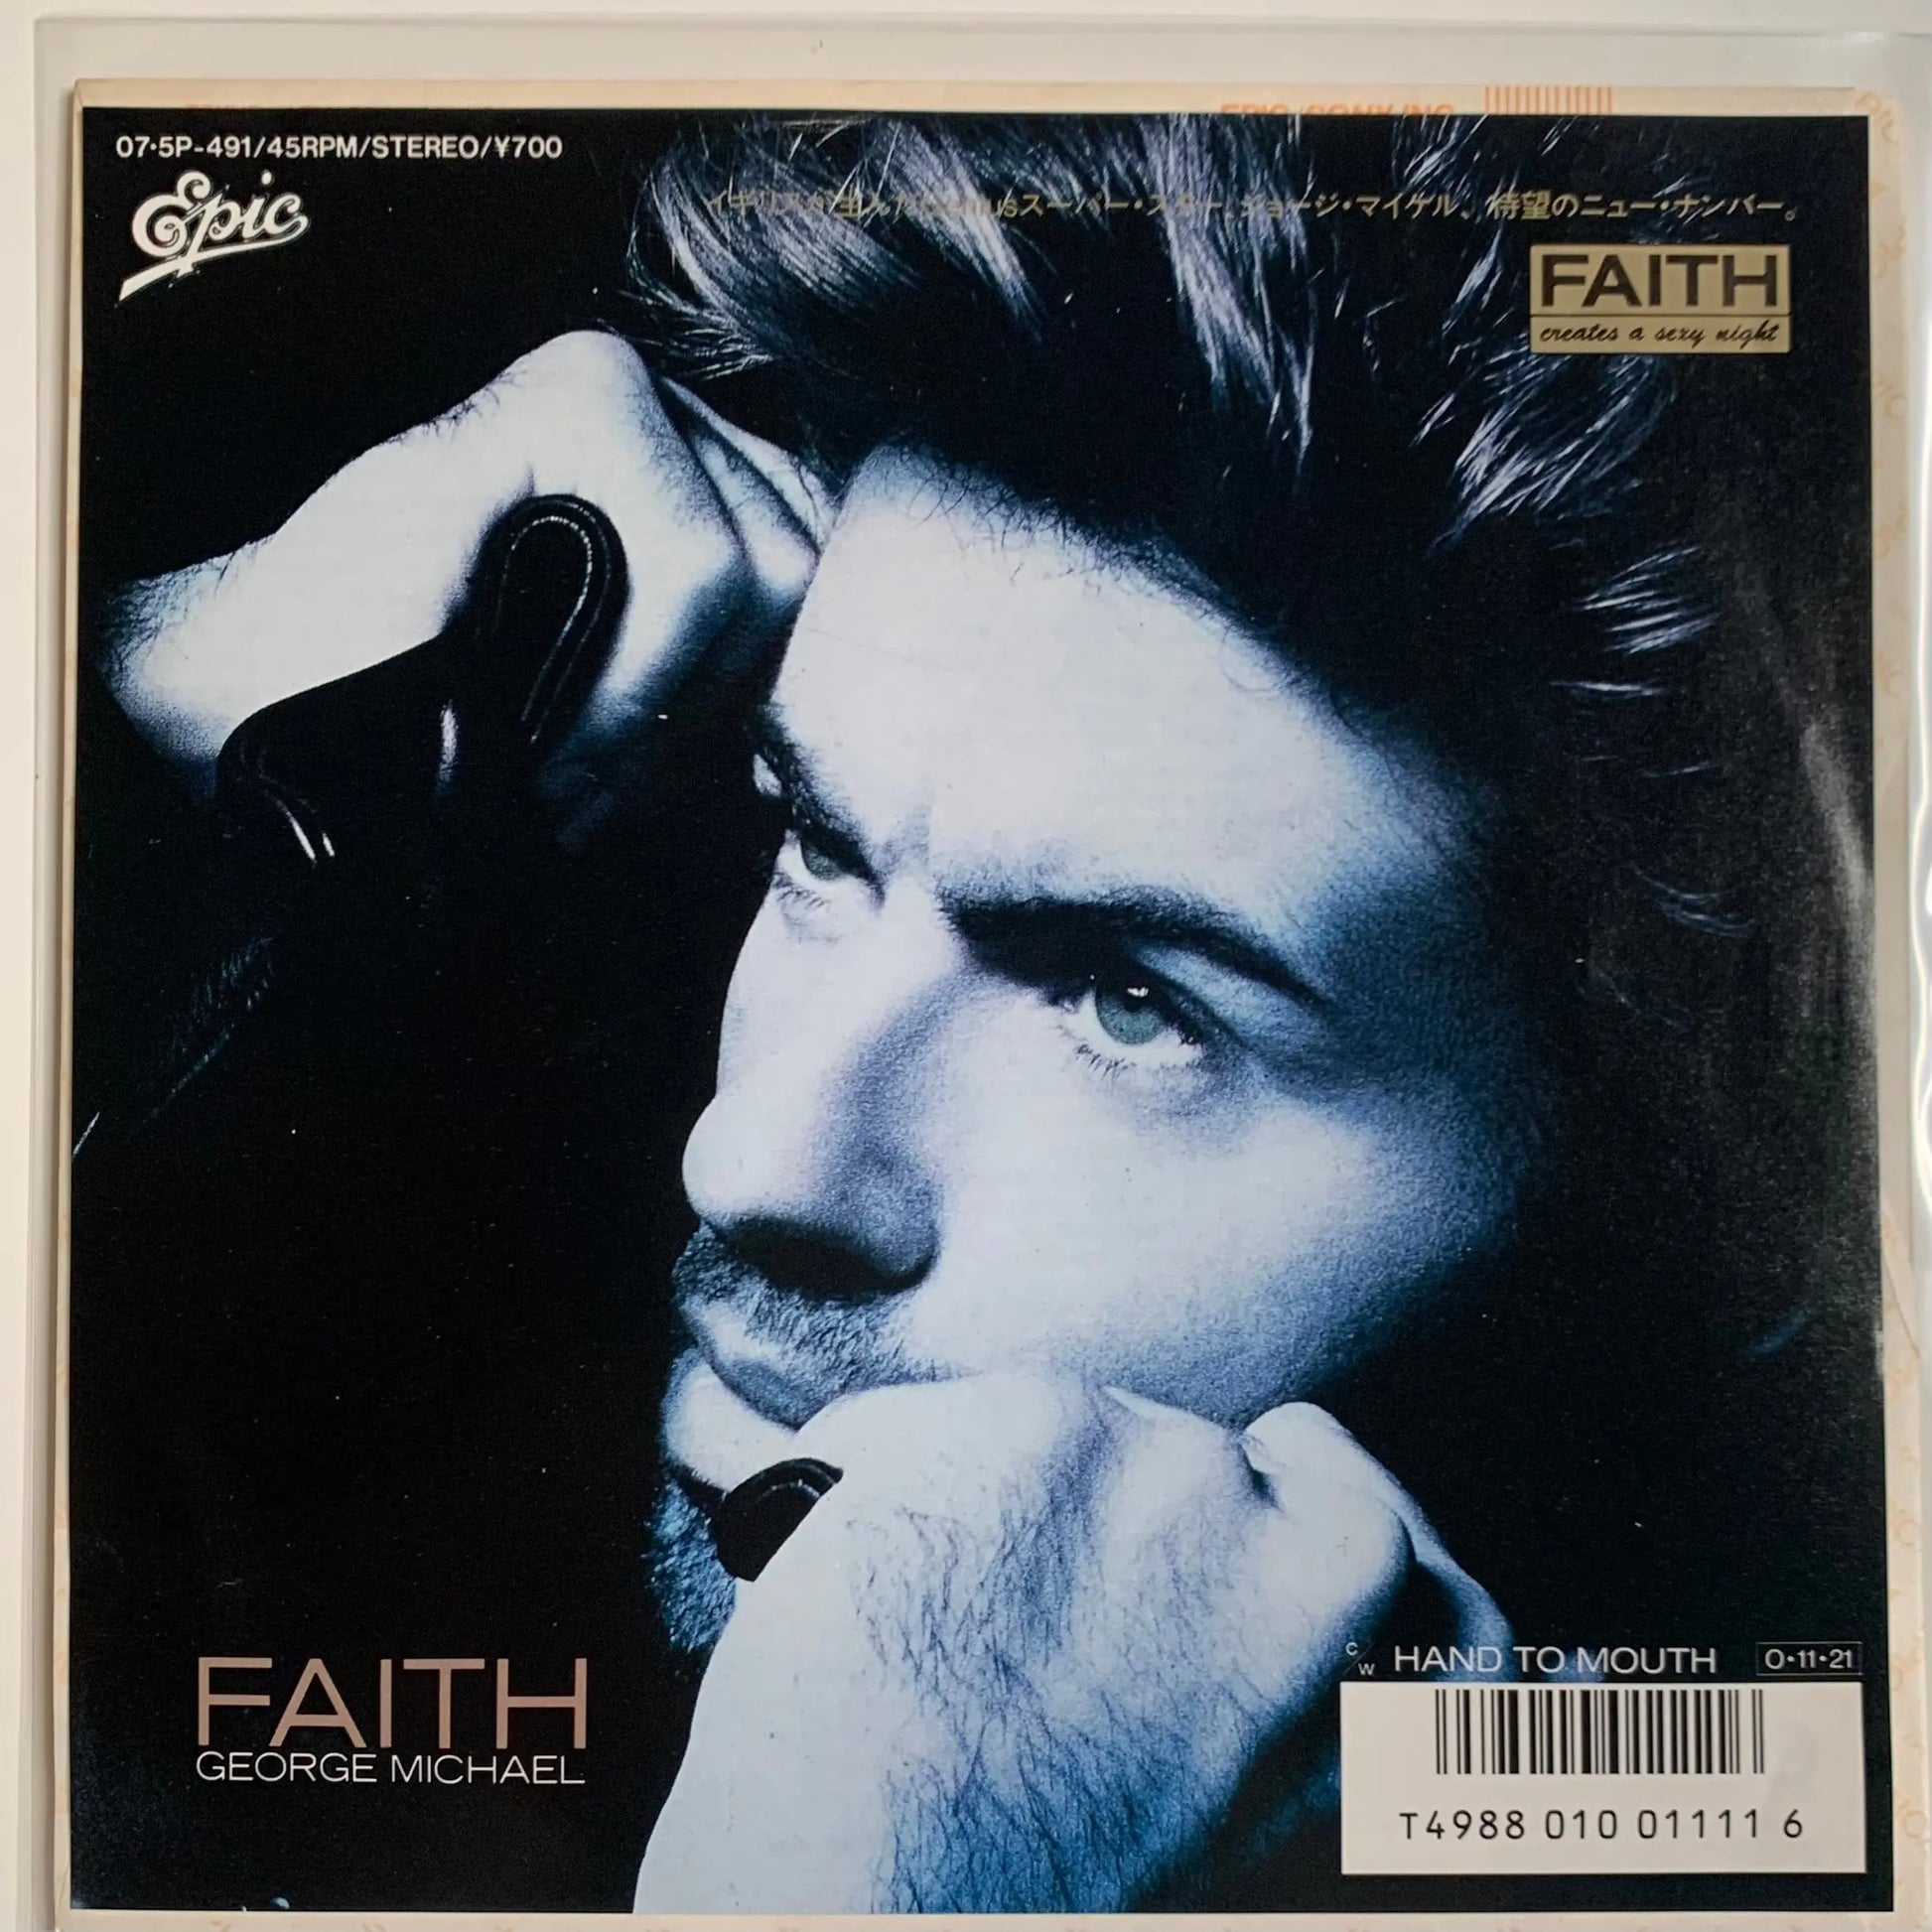 George Michael - Faith [Japanese 45 7" Single Vinyl]